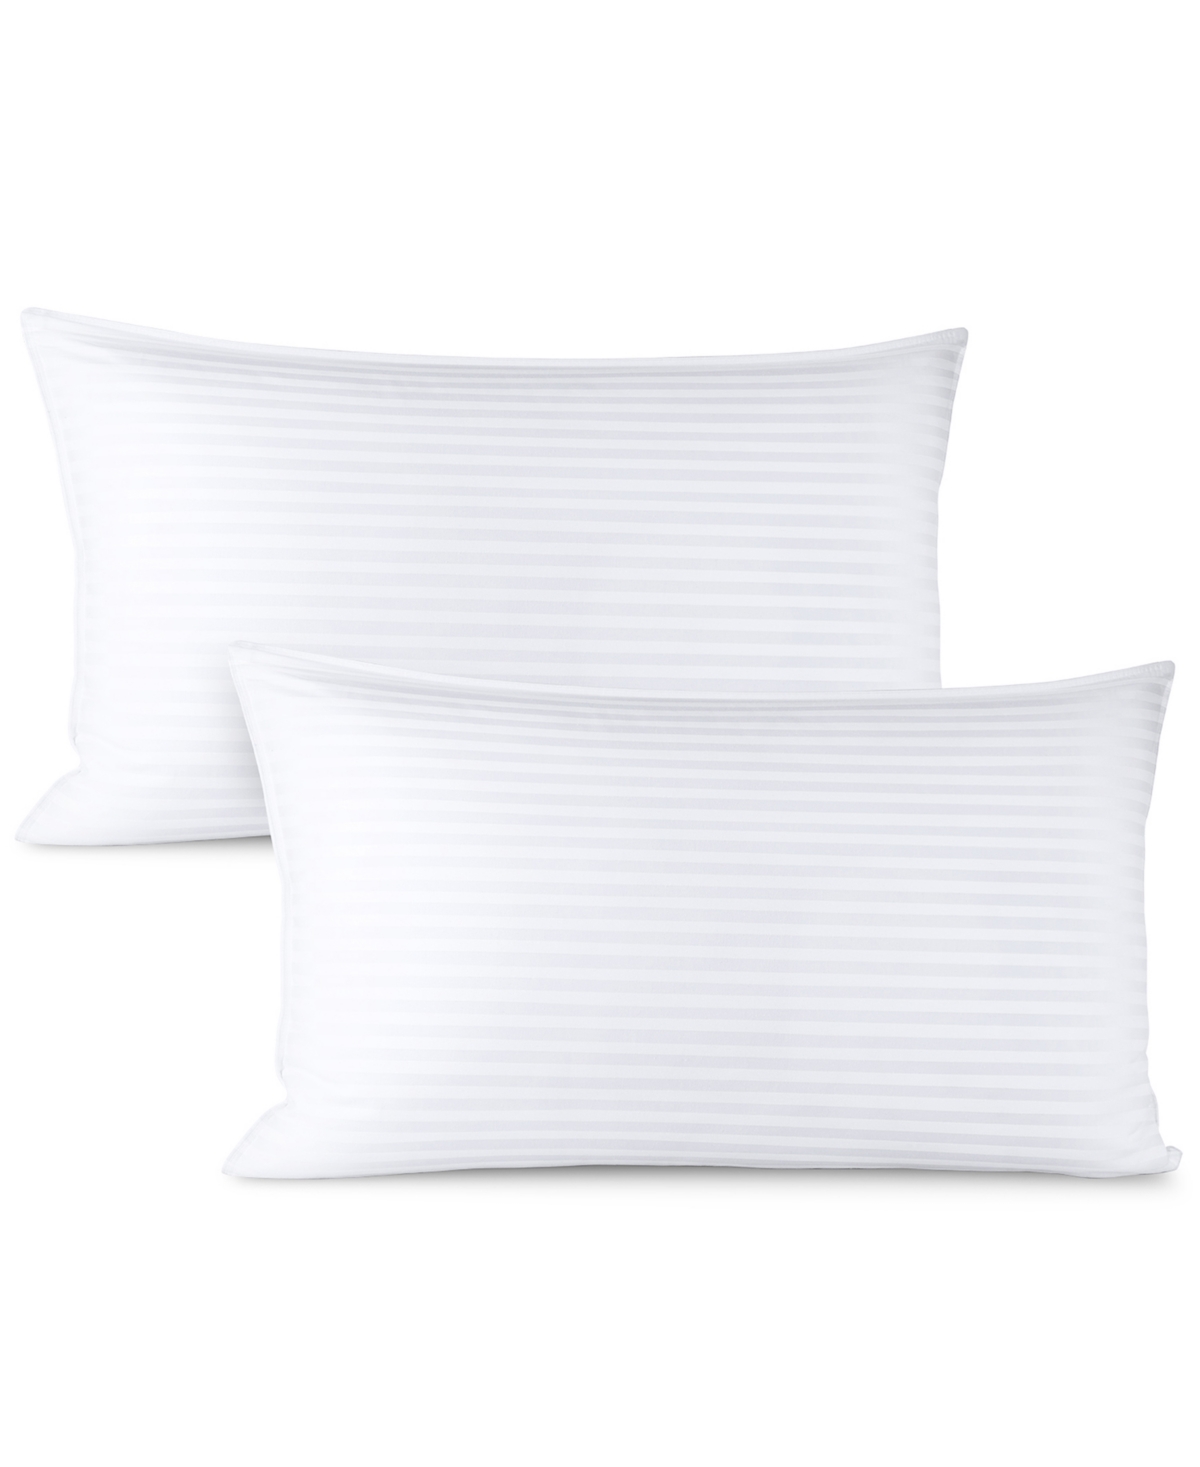 Nestl Bedding Bedding 2-piece Down Alternative Sleep Pillows Set, King In White